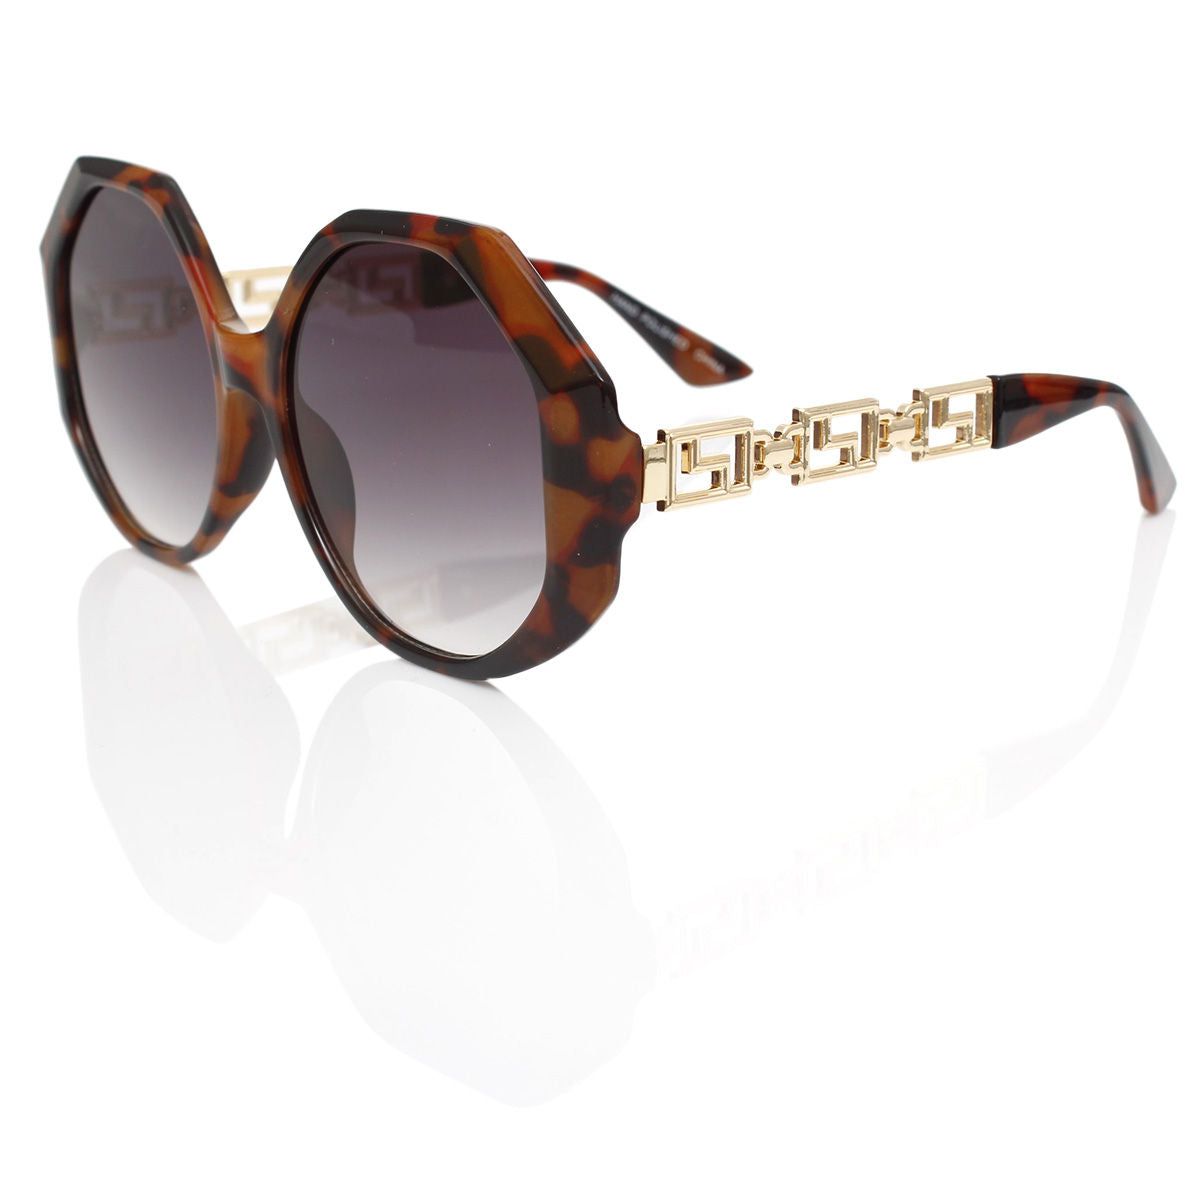 Sunglasses Square Marbled Greca Eyewear for Women